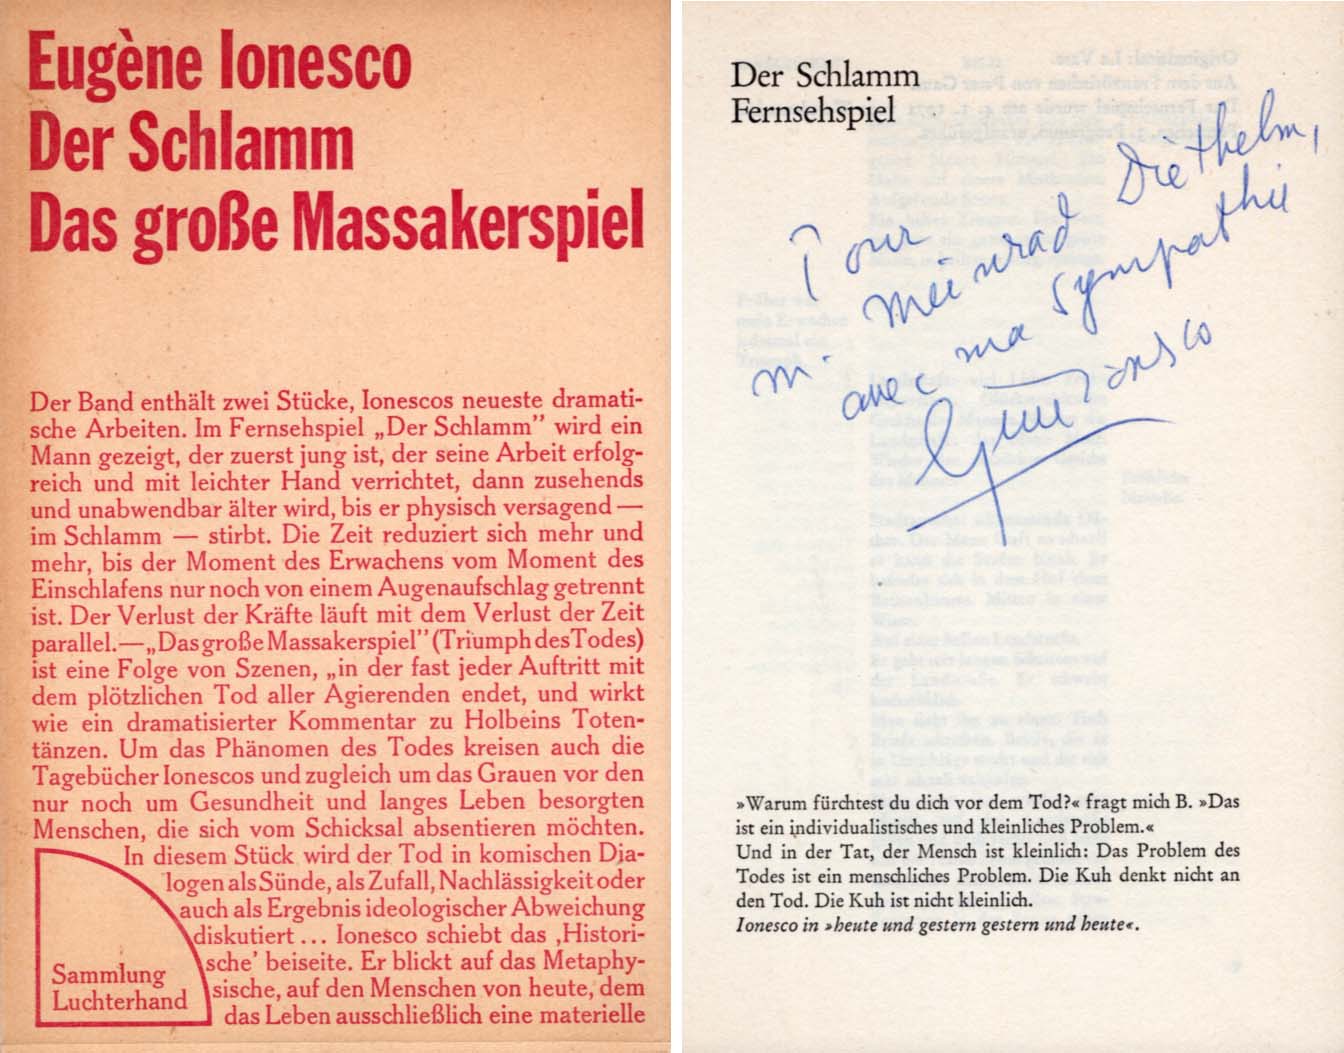 Eugène Ionesco Autograph Autogramm | ID 7983478538389